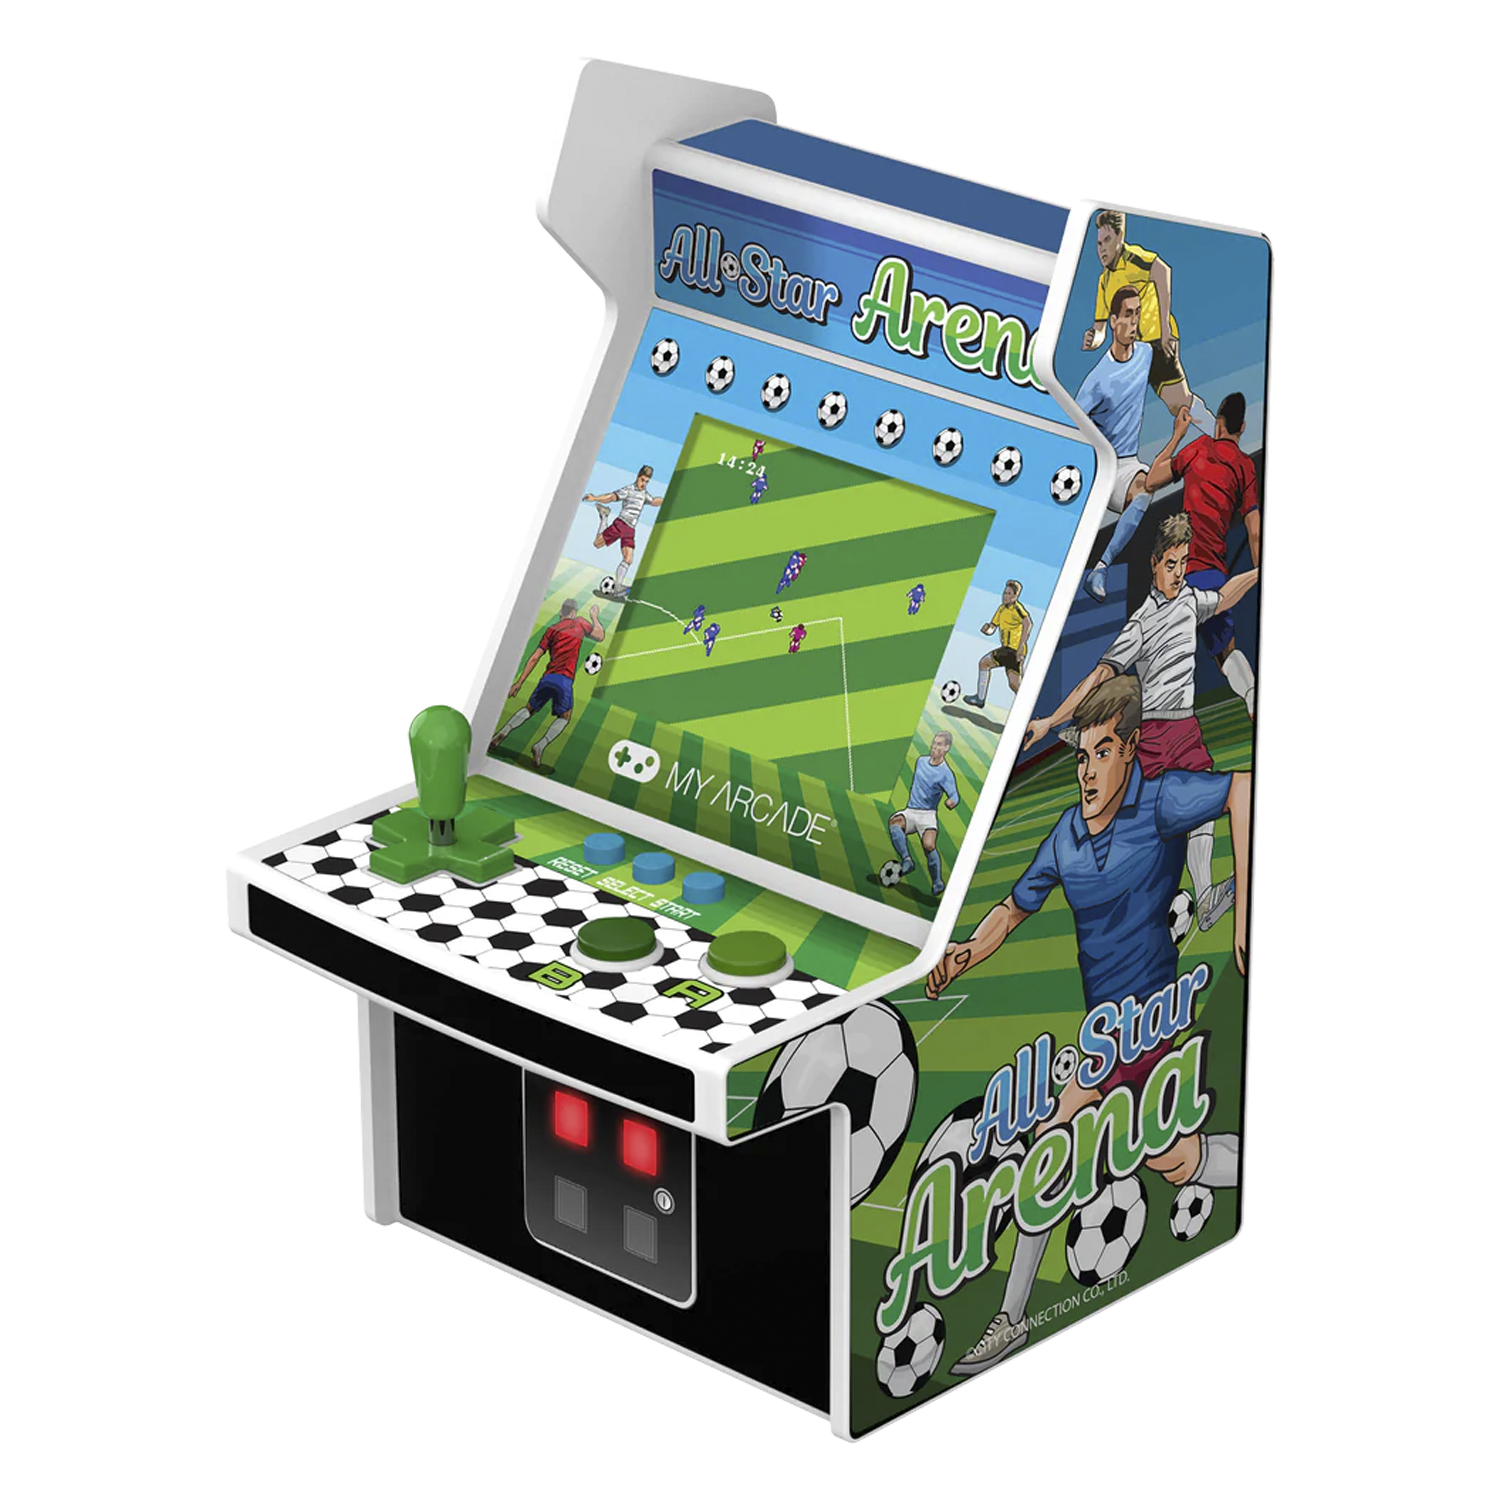 Console My Arcade All Star Arena Micro Player - DGUNL-4125